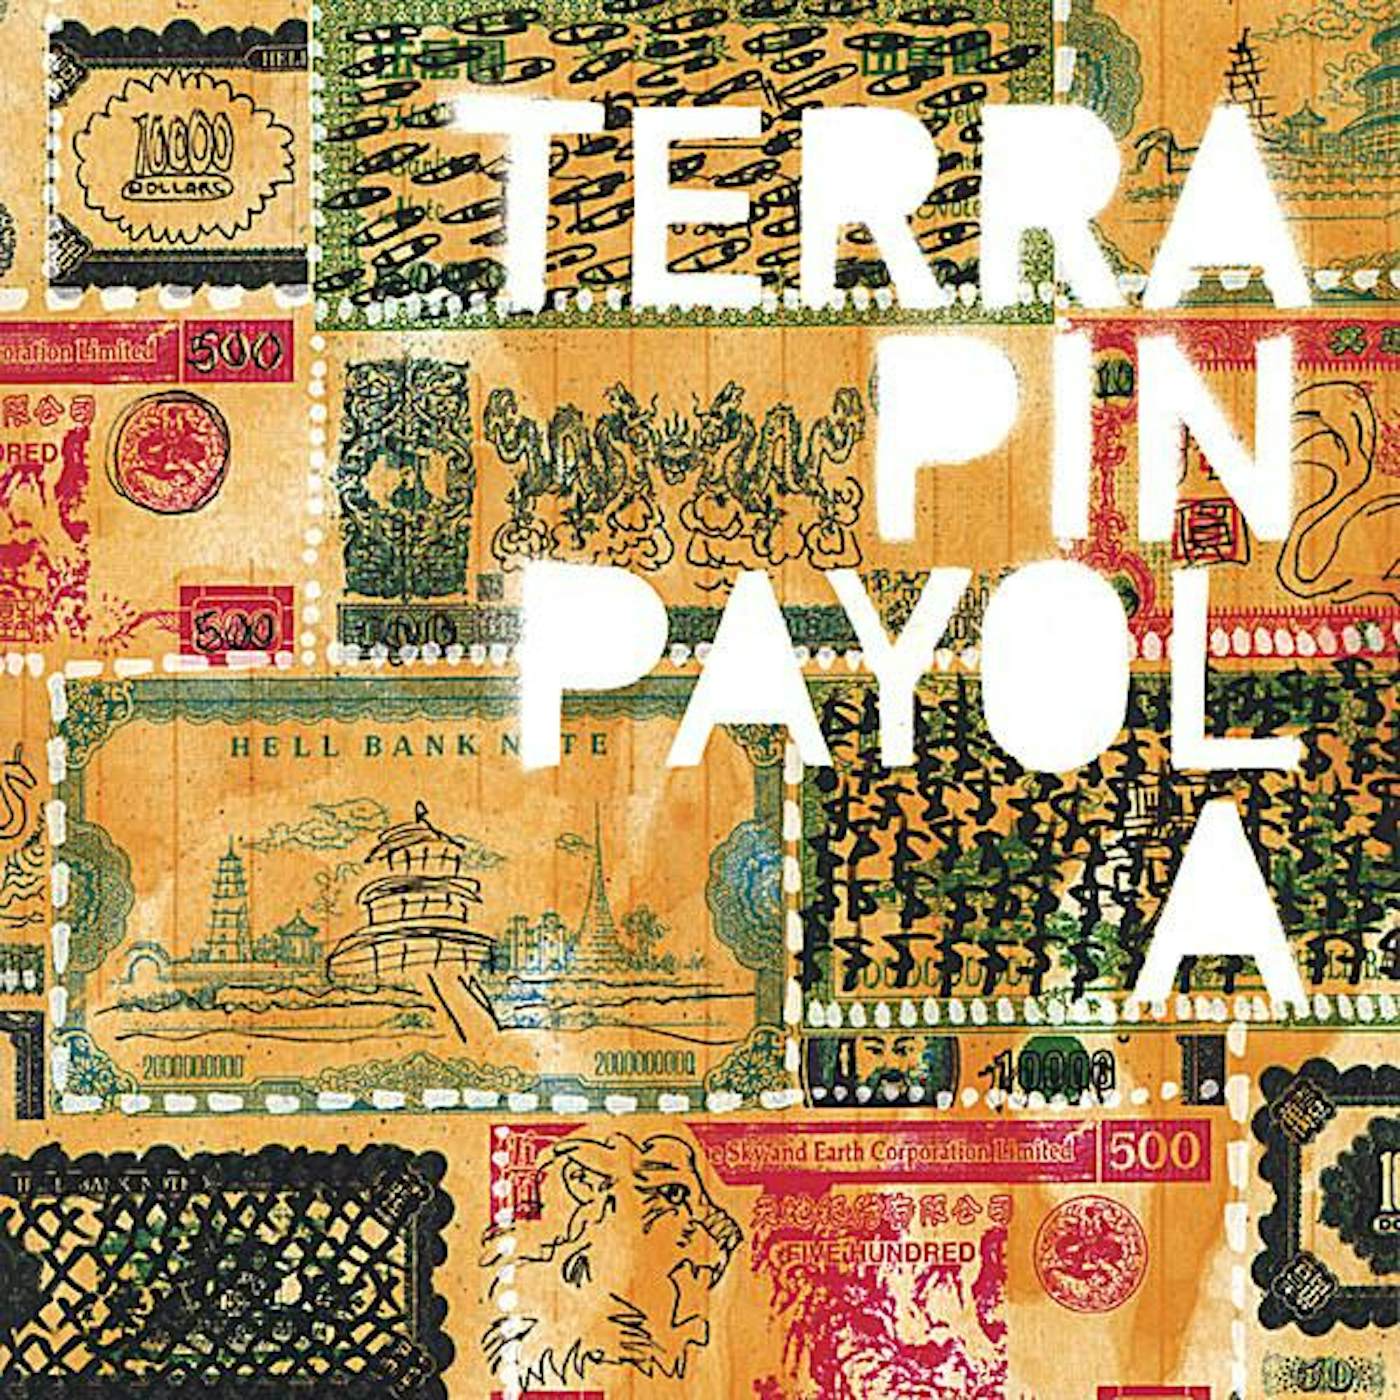 Terrapin PAYOLA CD